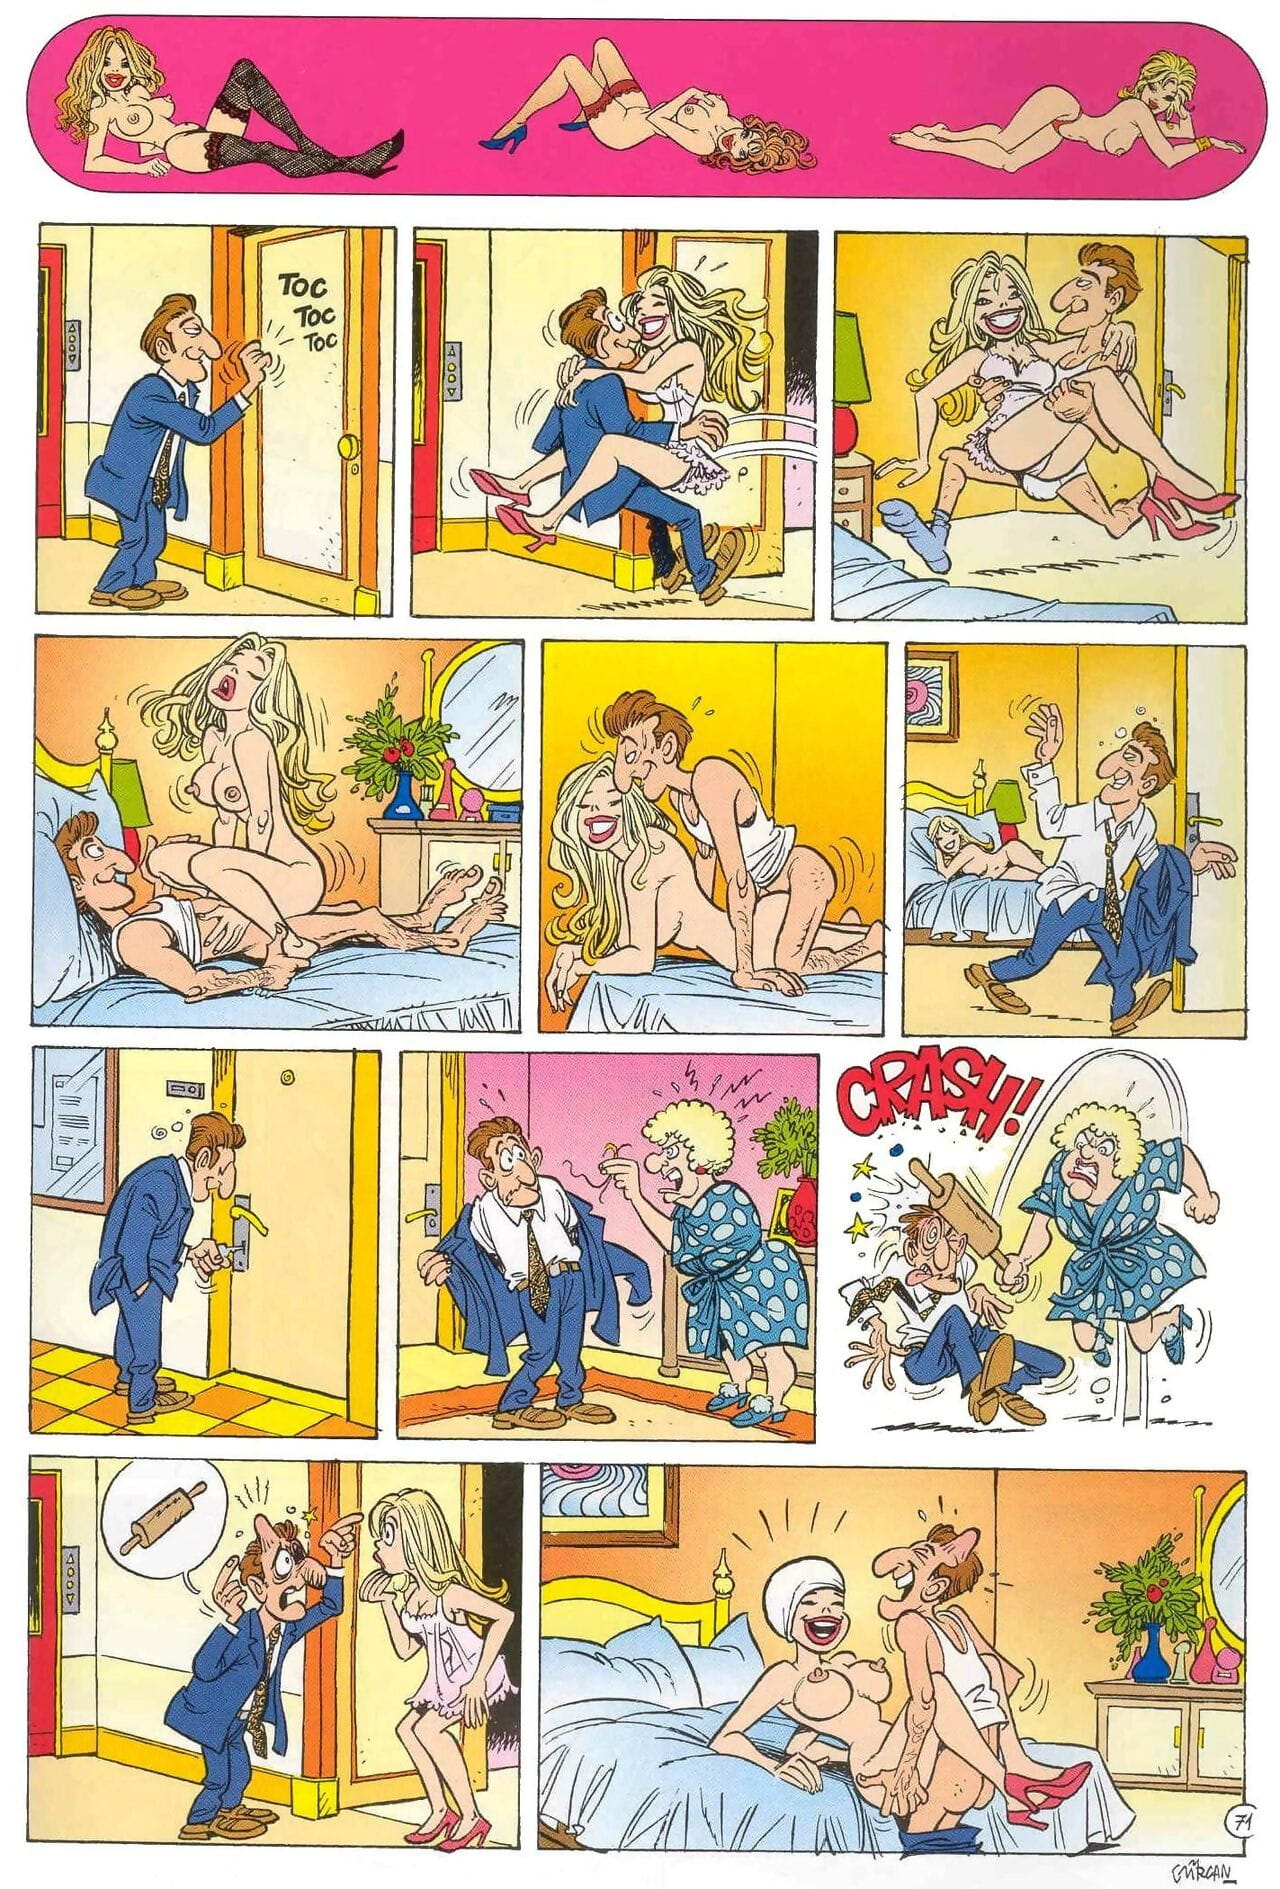 Sexy Fun Strips - part 2 page 1